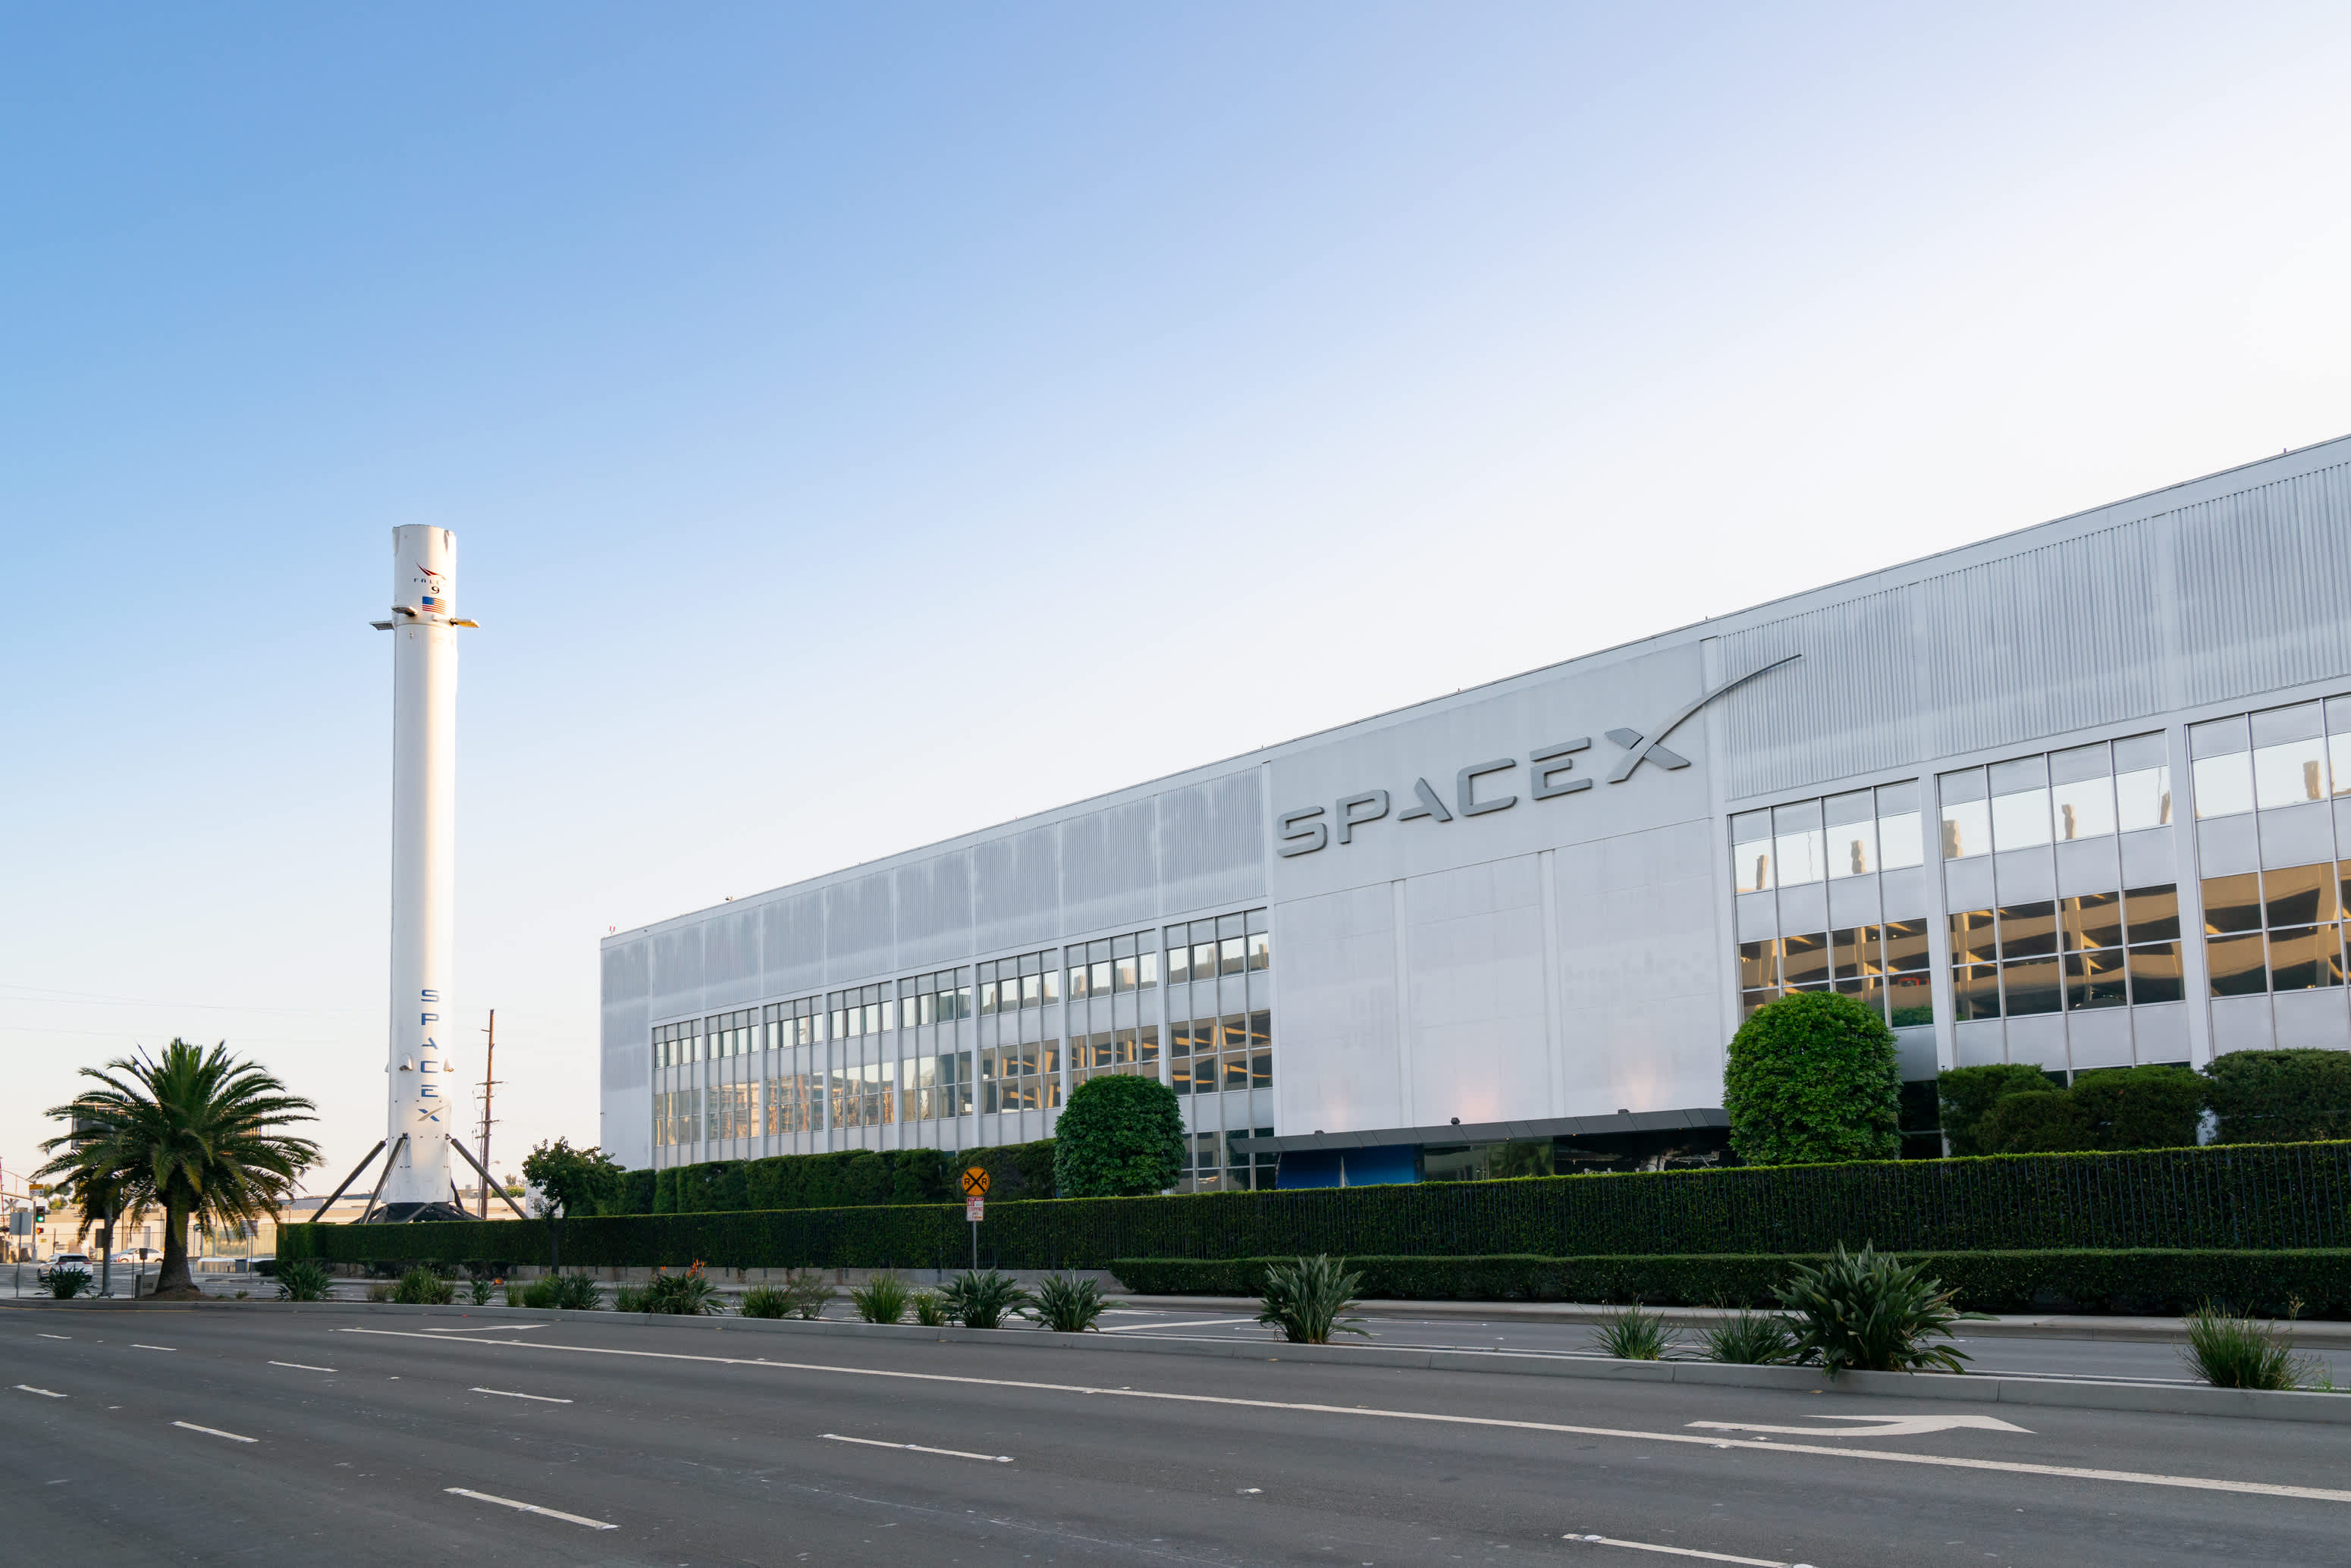 DOJ investigating SpaceX after hiring discrimination complaint